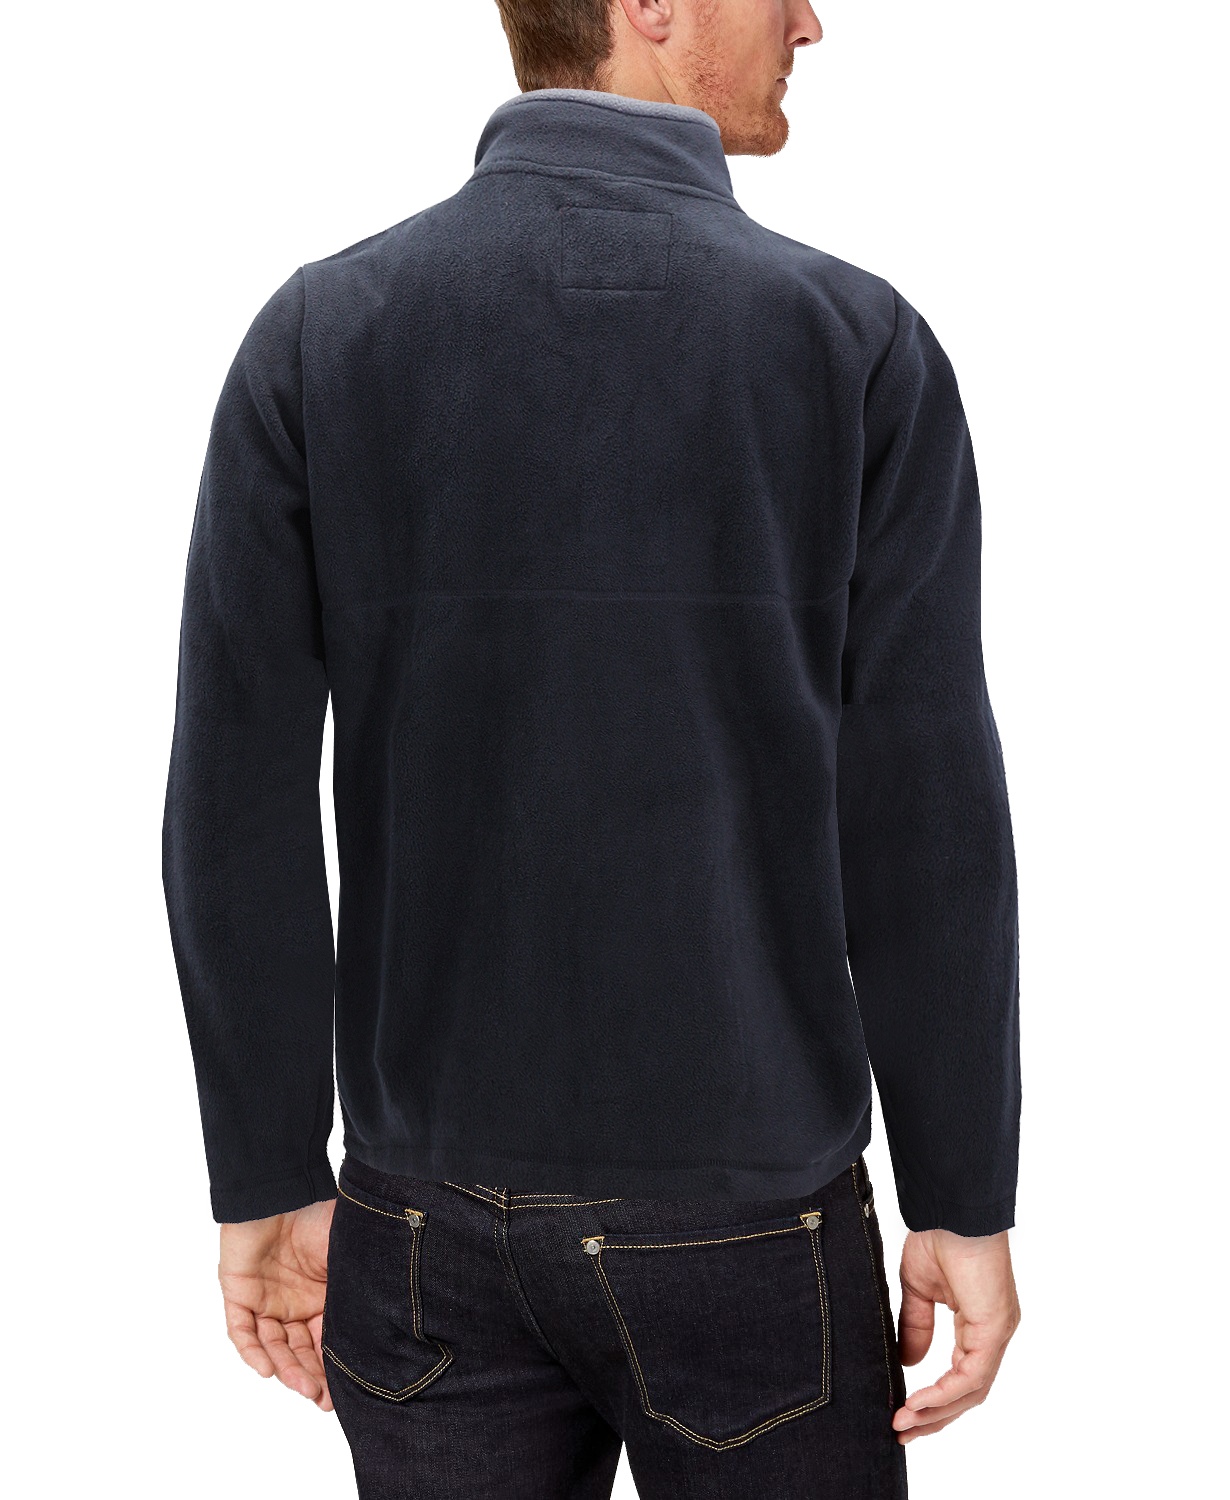 Men's Polar Fleece Full Zip-Up Collared Sweater Lightweight Warm Sweater Jacket (XL, Black) - image 2 of 3